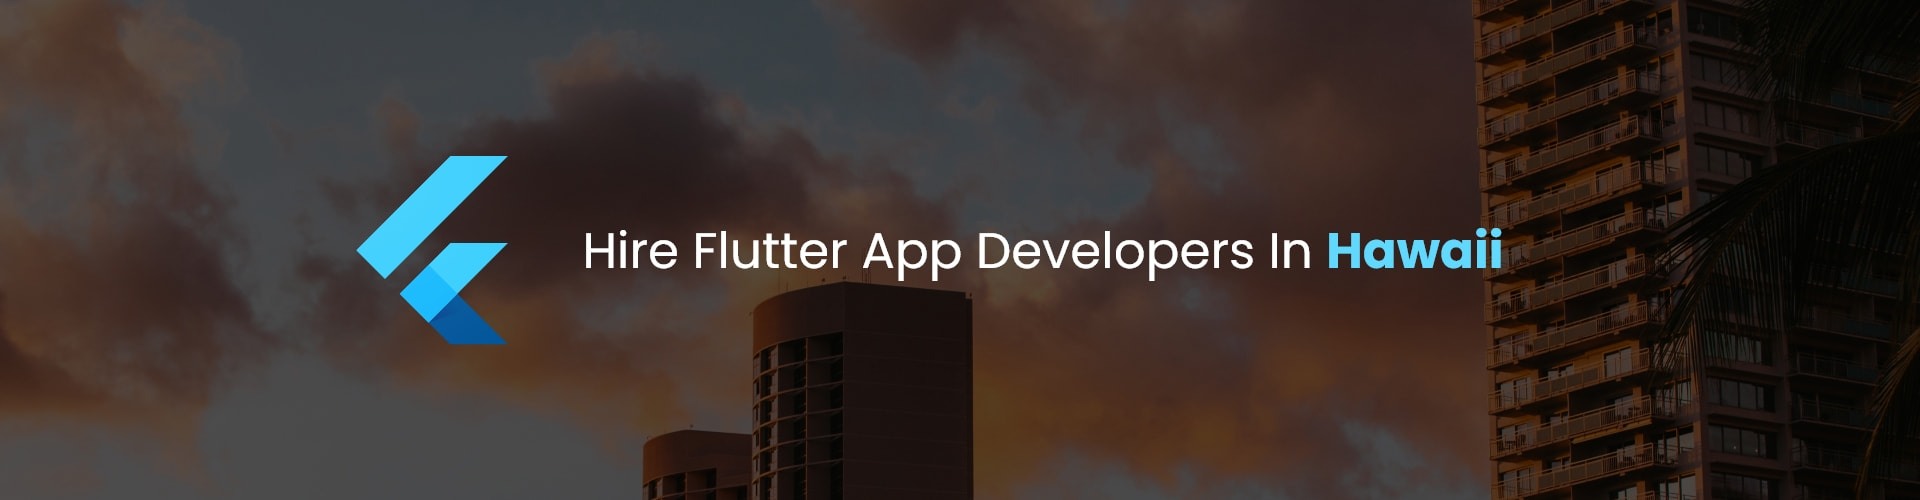 hire flutter app developers in hawaii